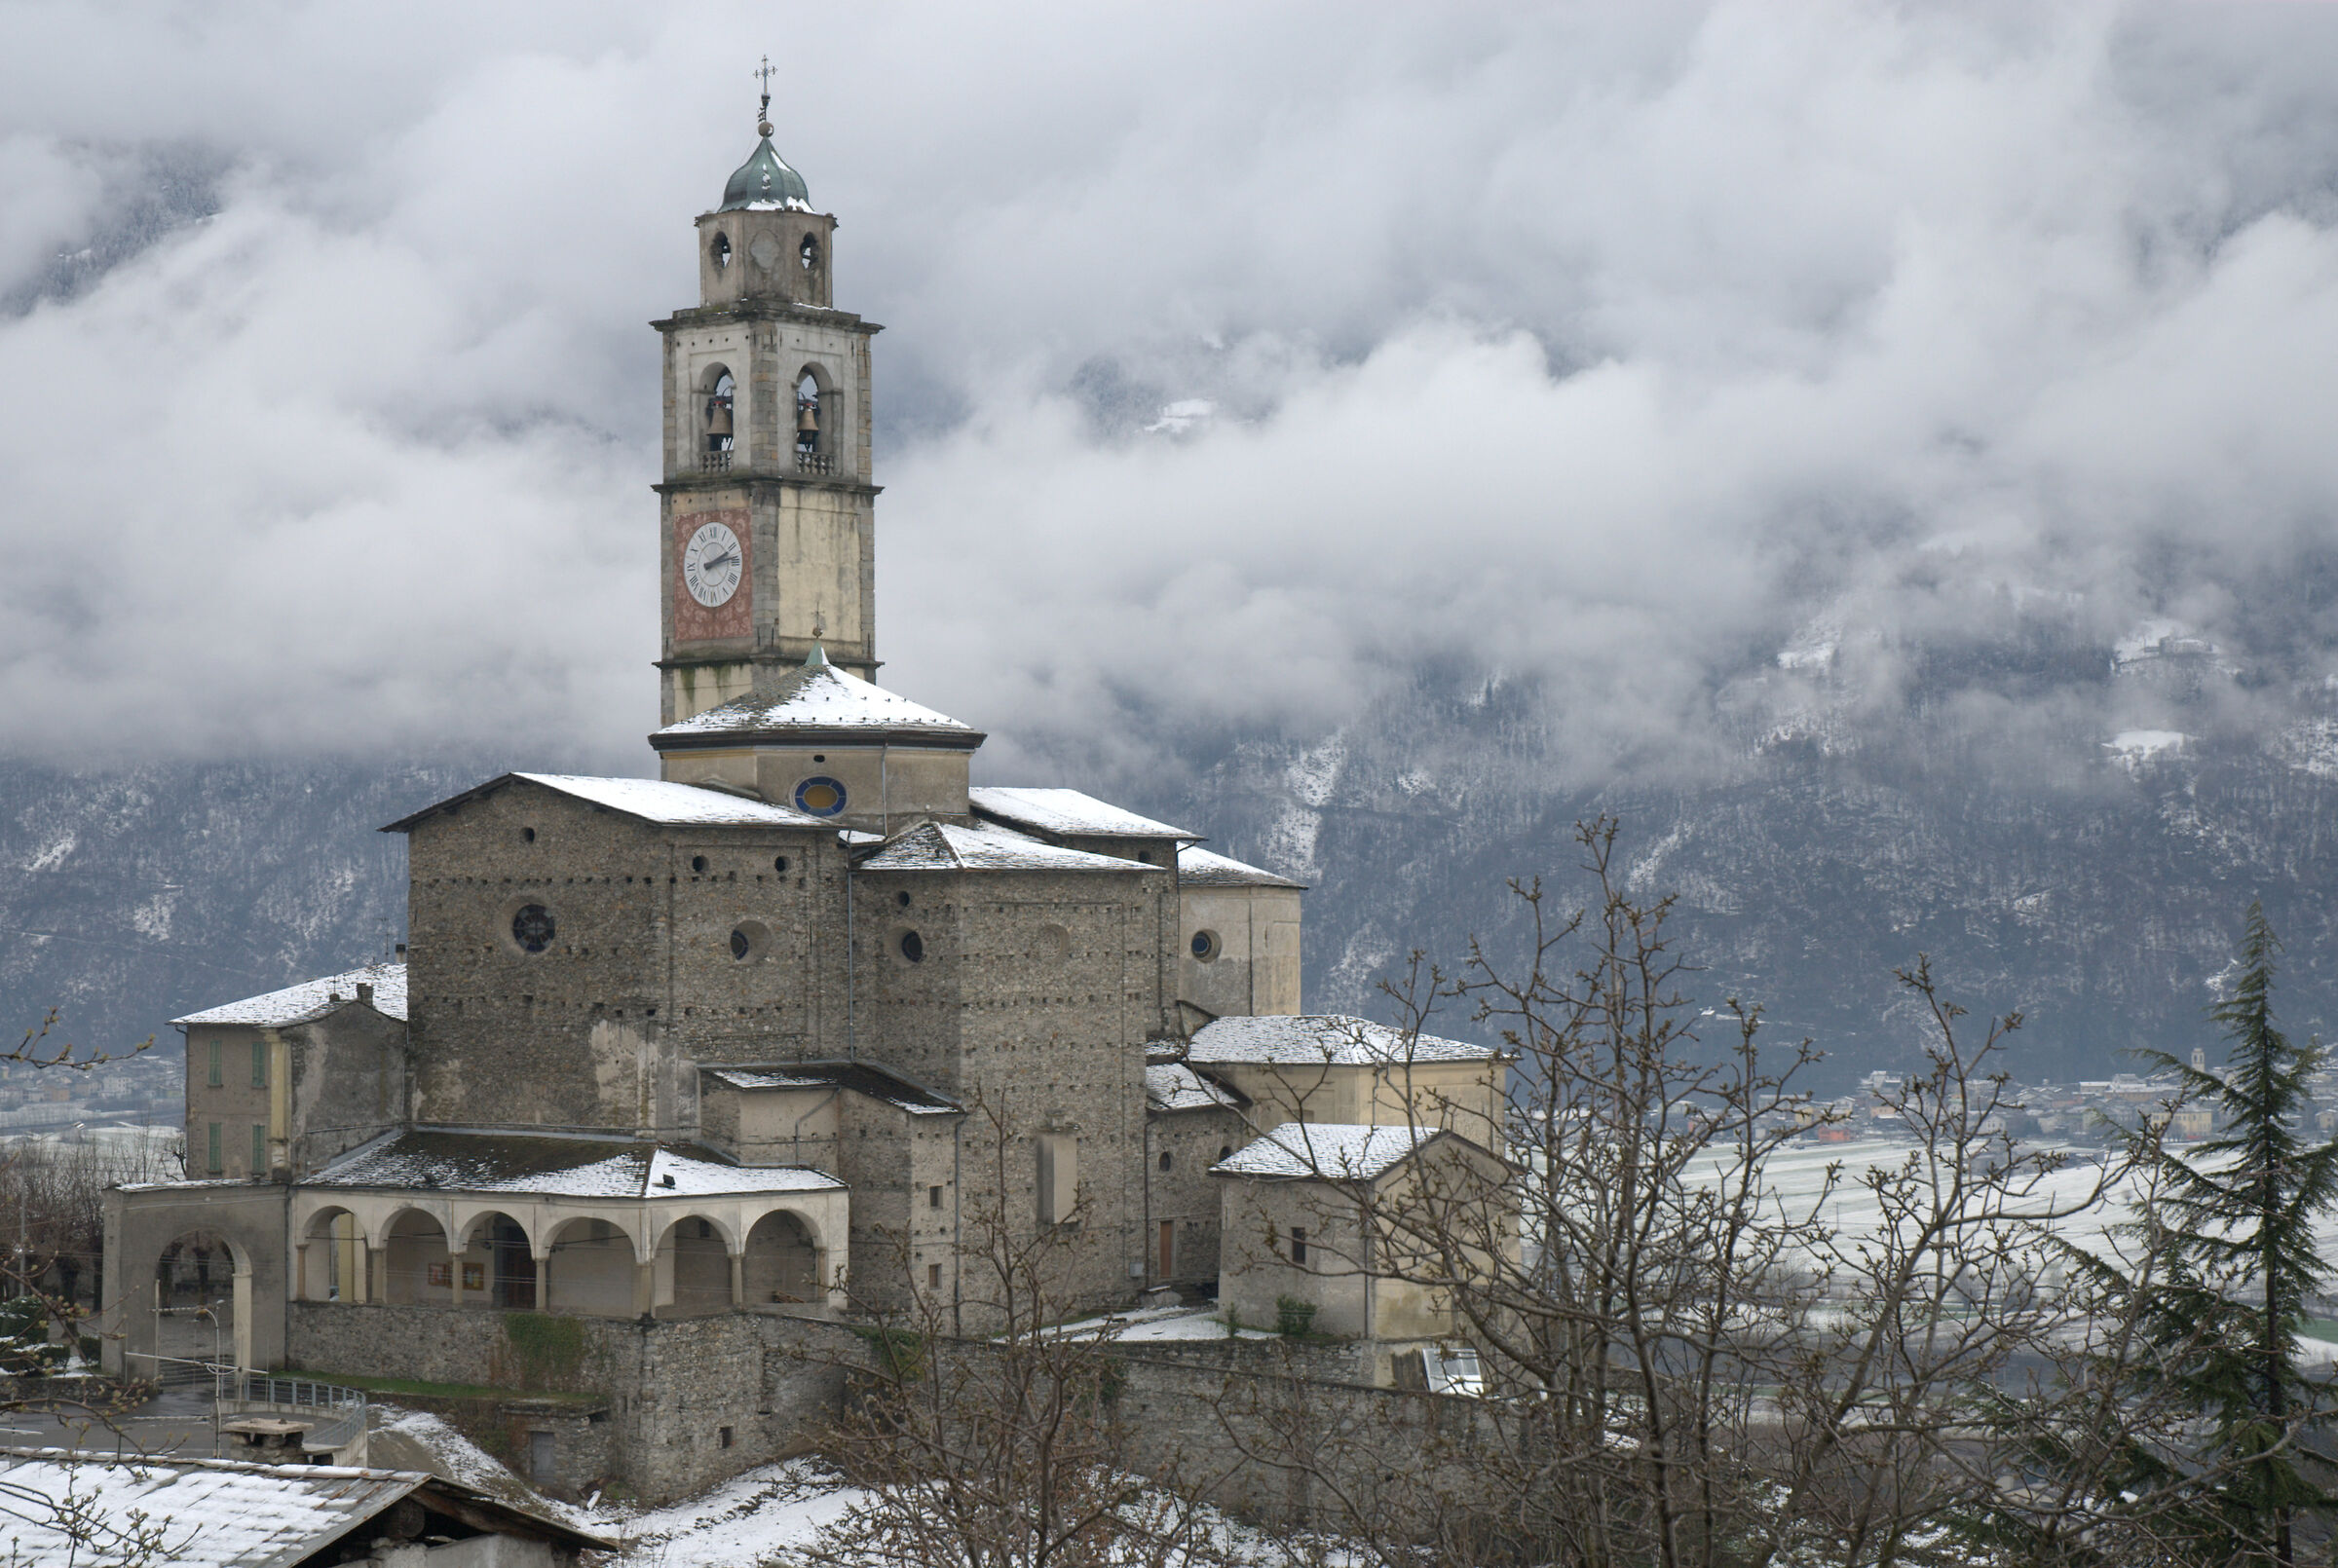 Chiesa in Valtellina...